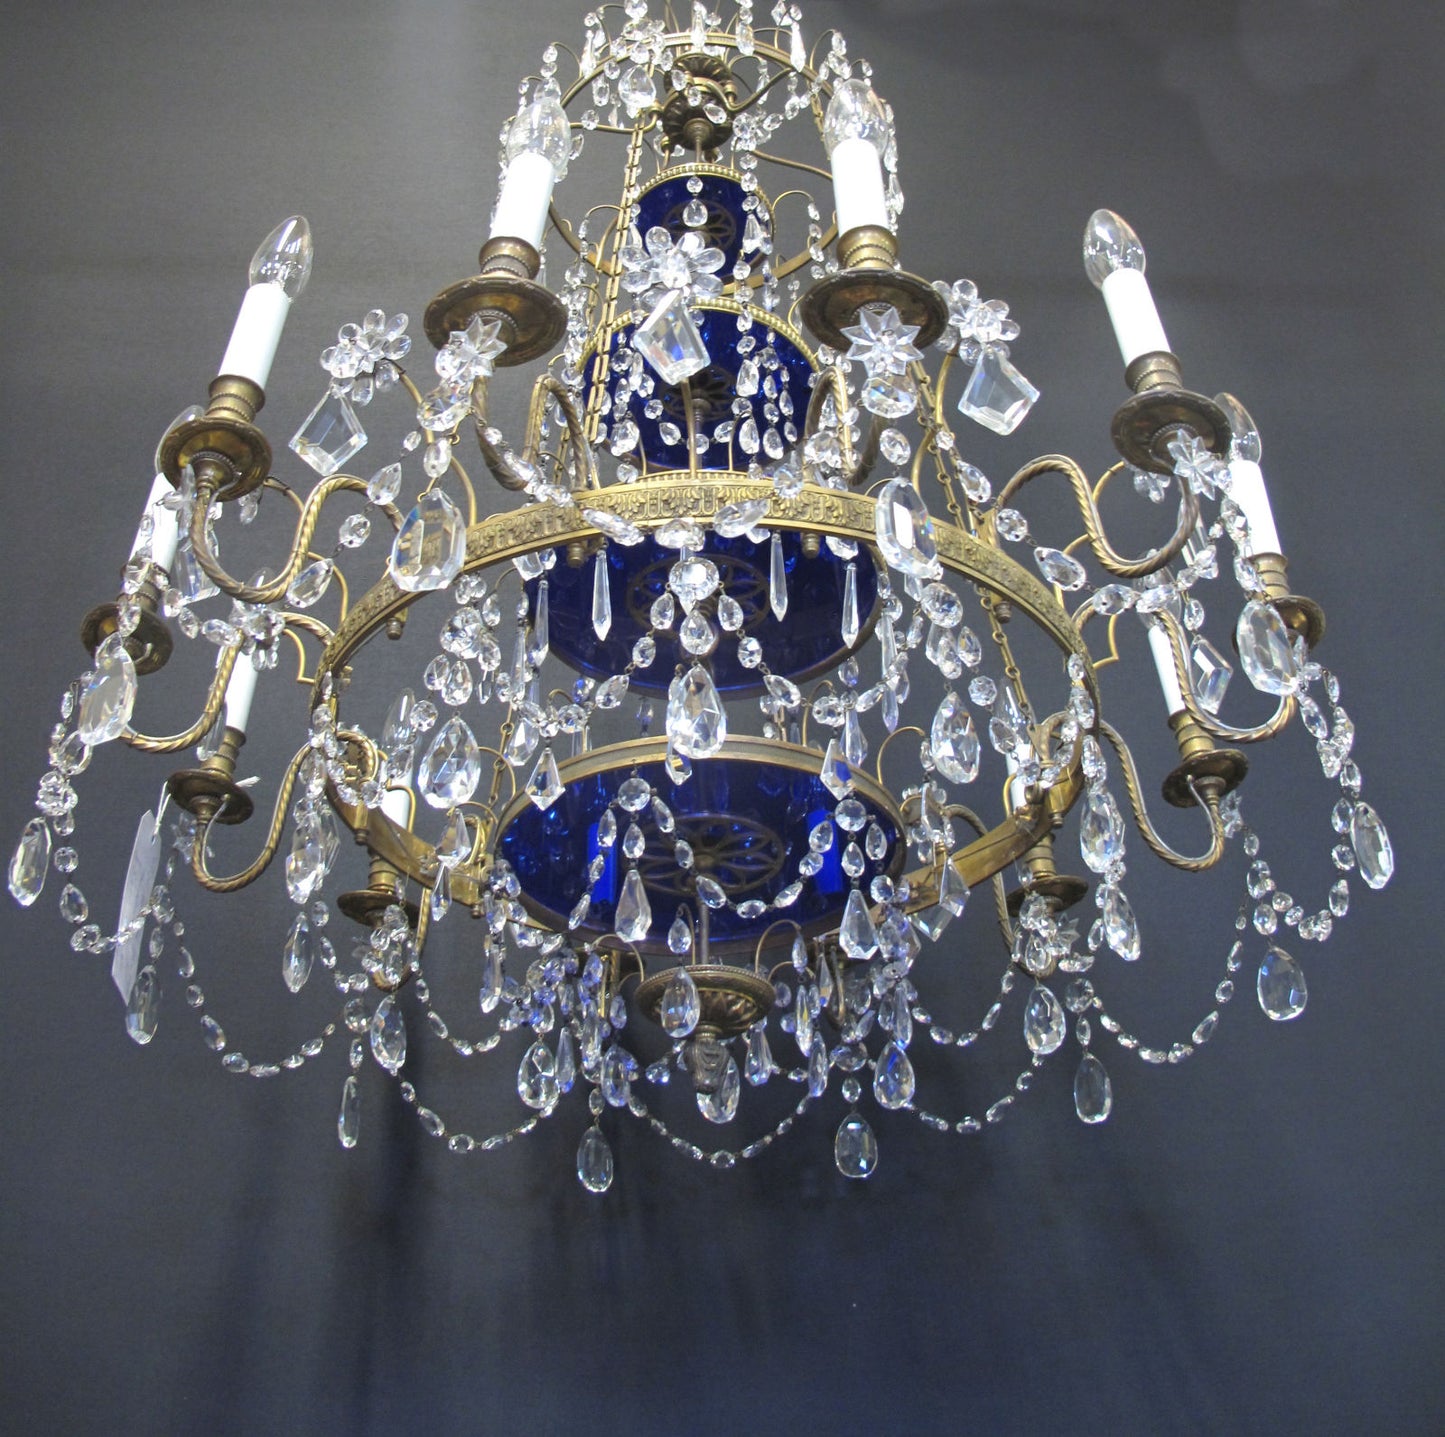 view of chandelier from below